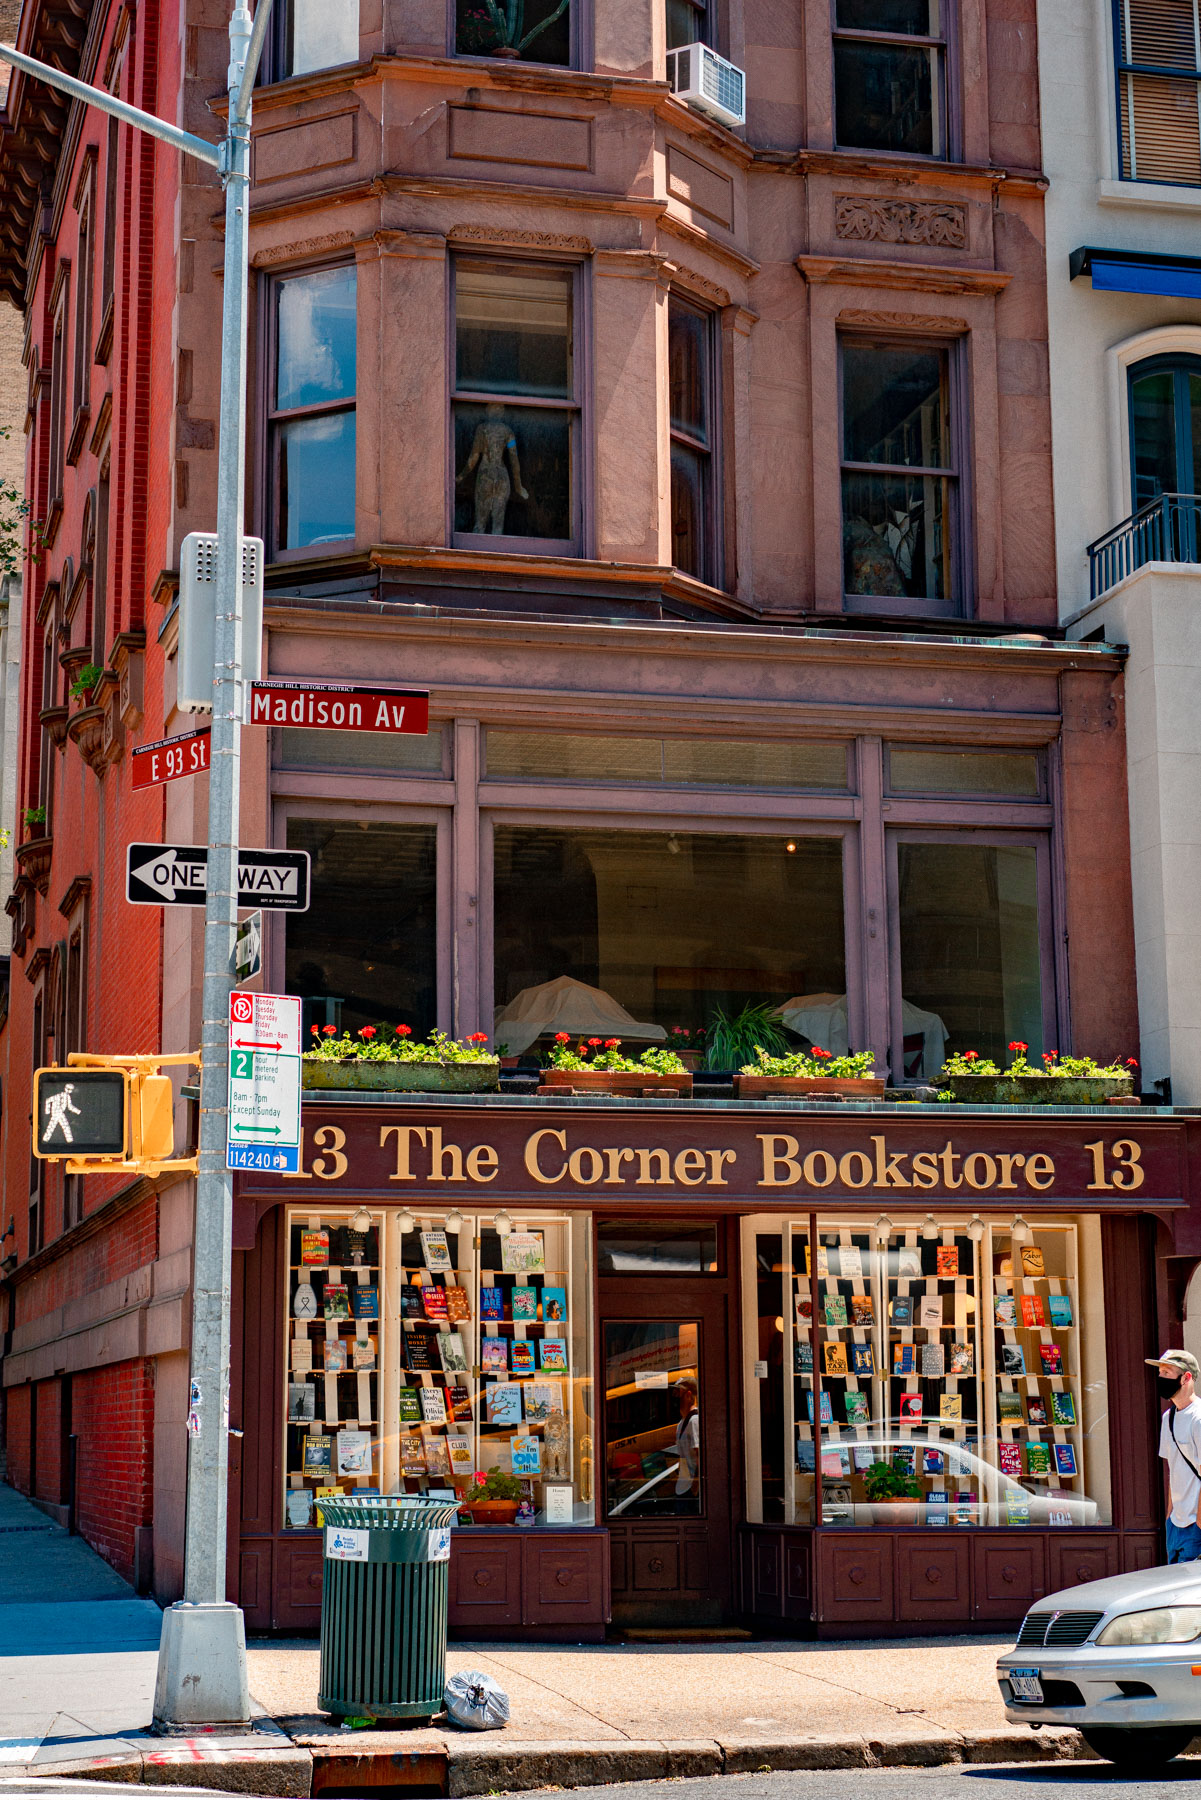 The Top Ten Bookstores in Manhattan